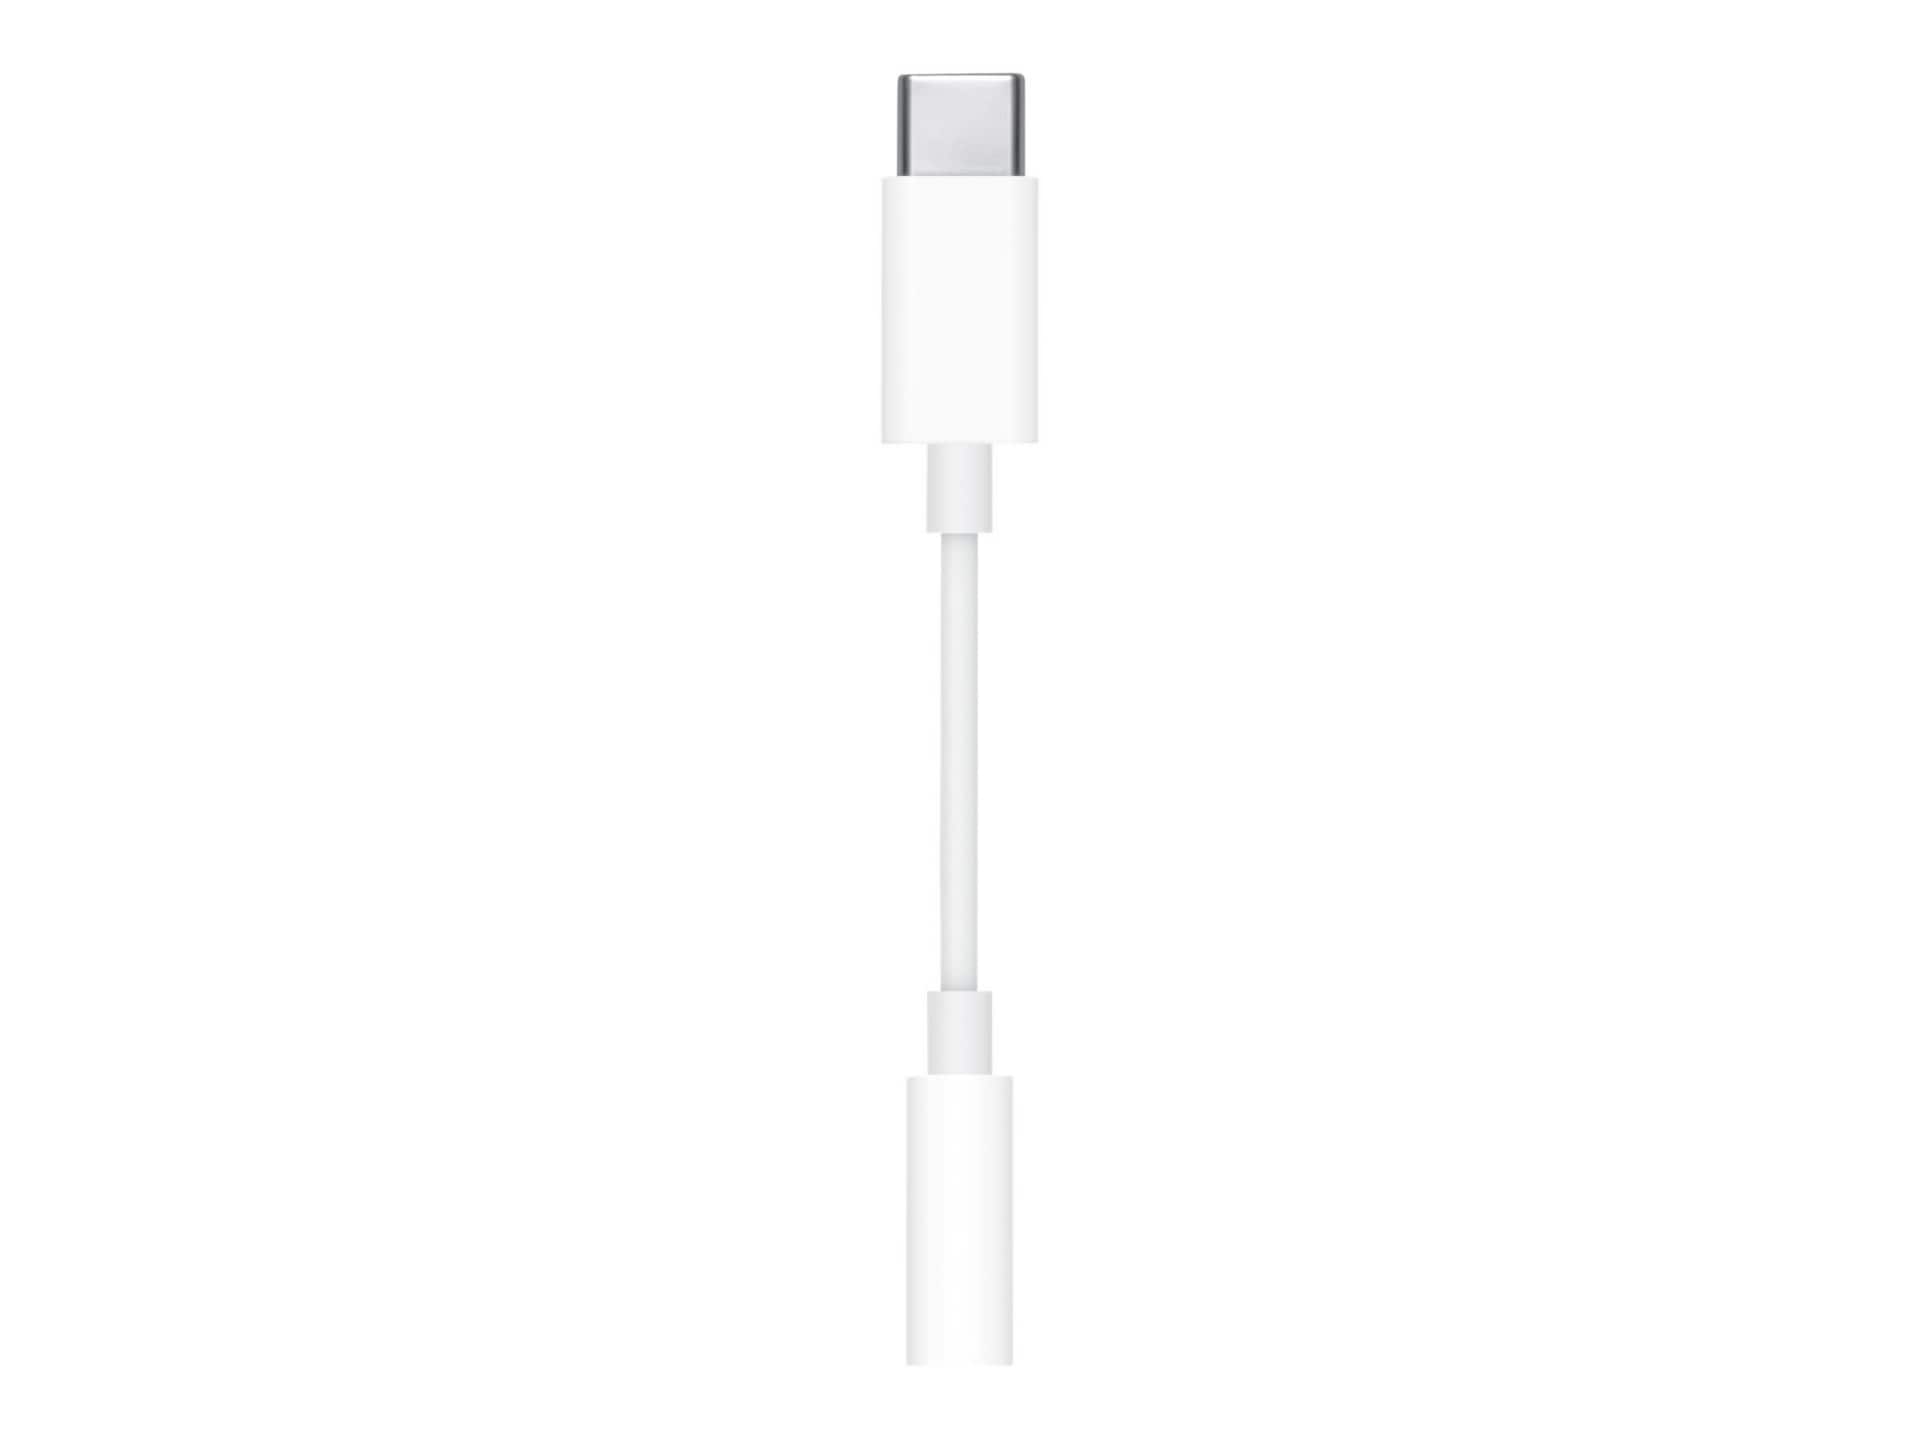 Apple USB-C to 3.5 mm Headphone Jack Adapter - USB-C to headphone jack  adapter - MU7E2AM/A - USB Cables 